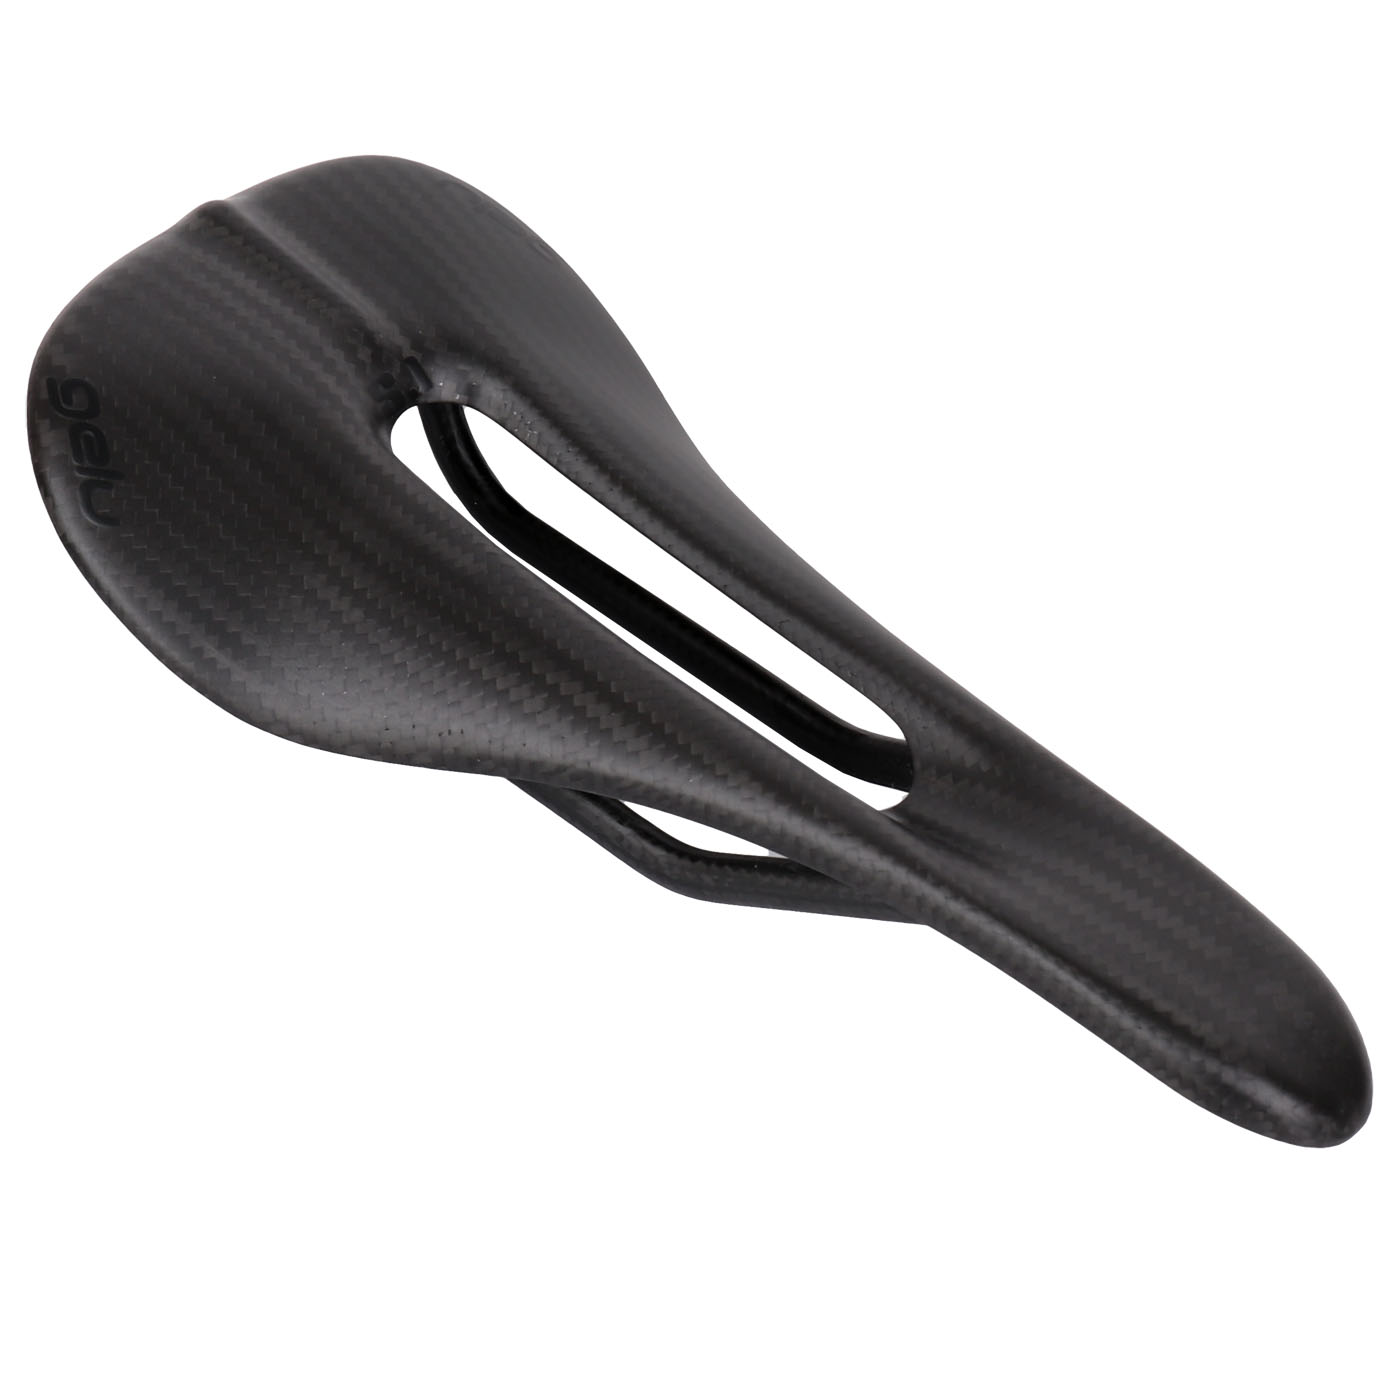 Productfoto van Gelu S1 Carbon Saddle - black Logos